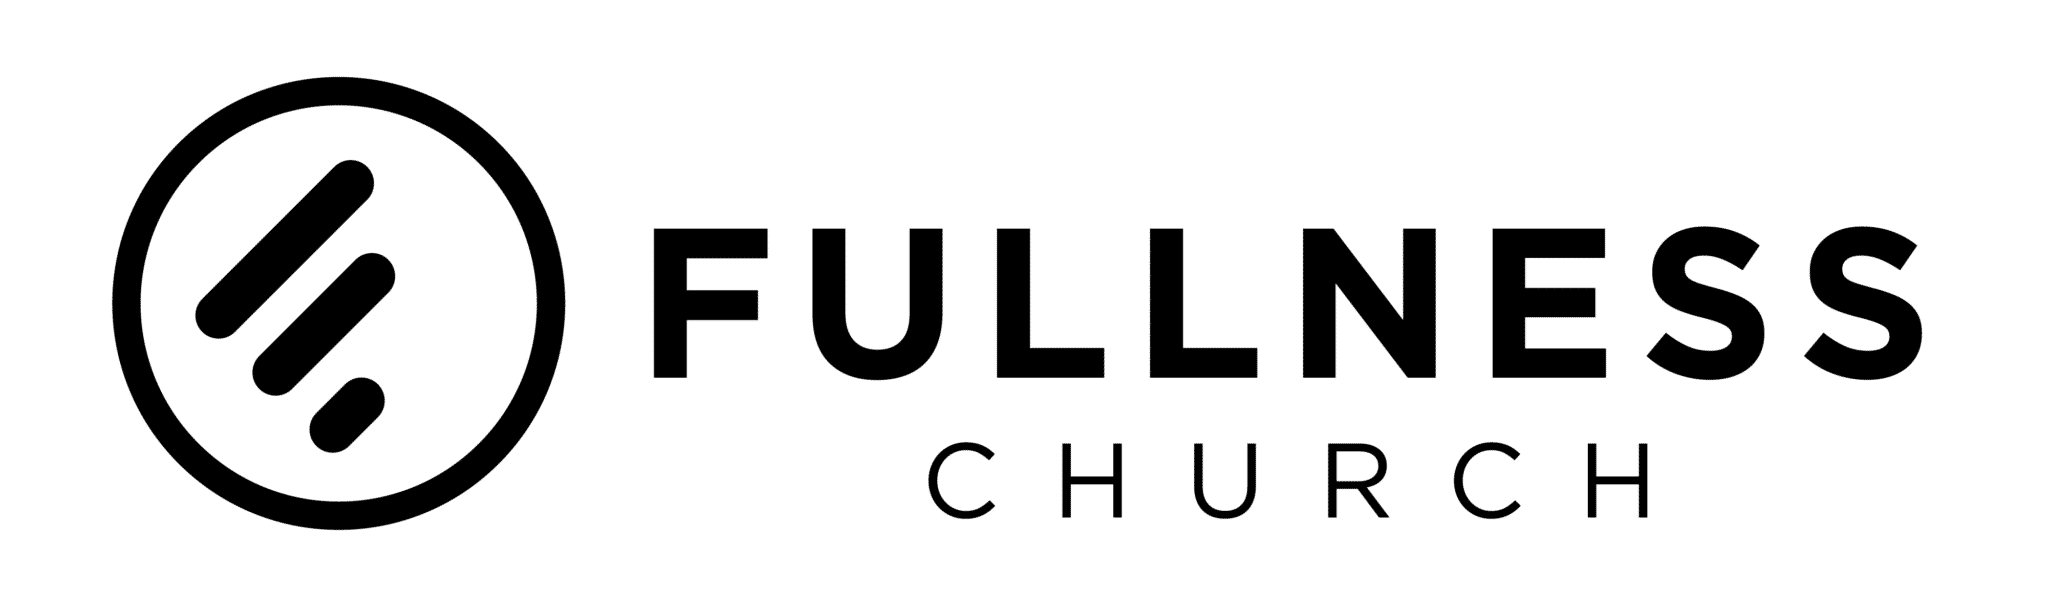 Fullness Church's Logo